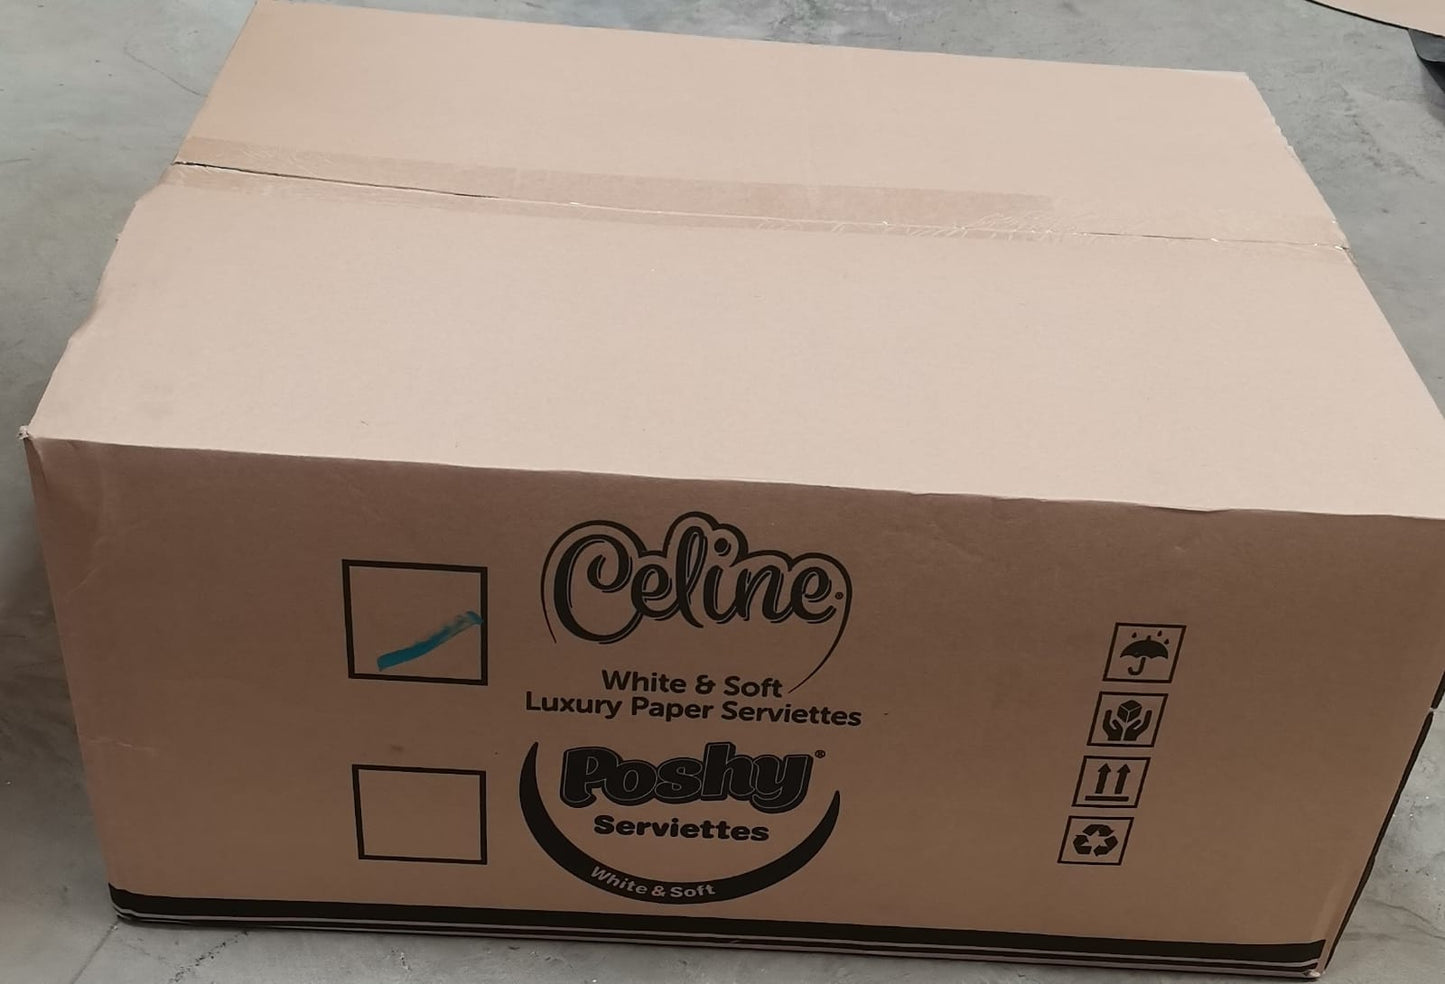 Celine Serviettes Value Pack – Jubilee Tissue Industries